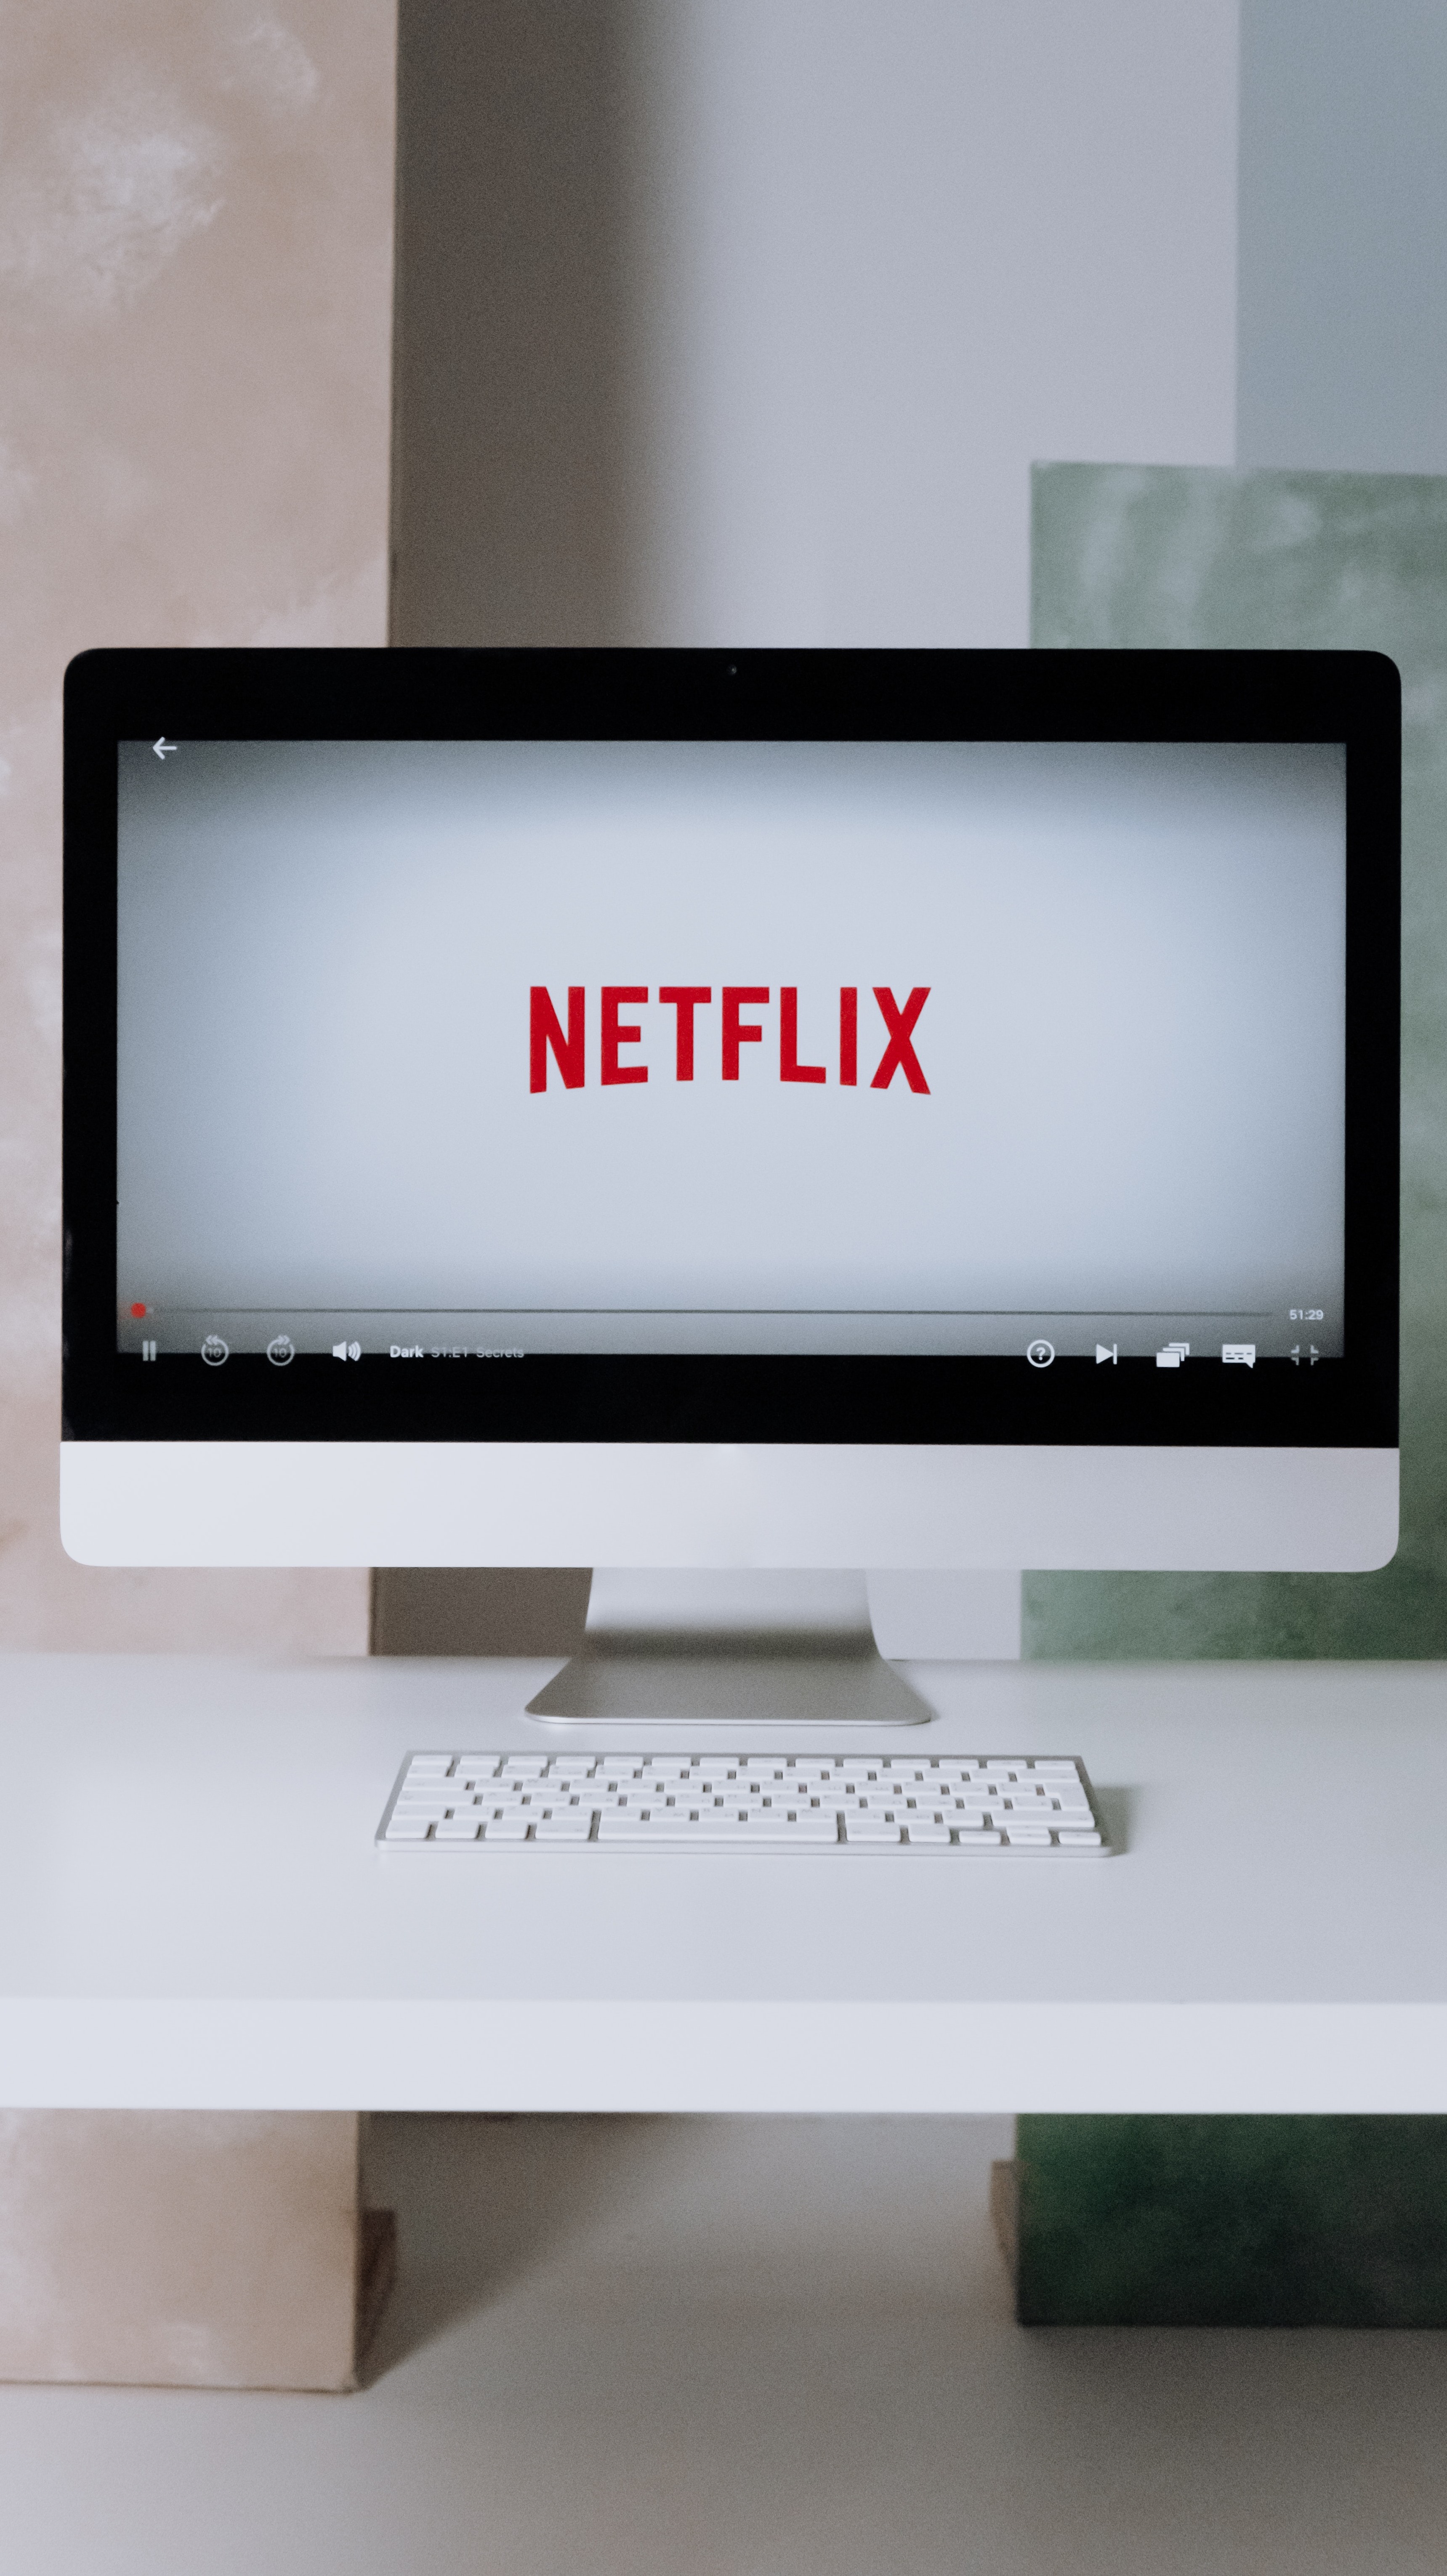 Códigos da Netflix: como usá-los para encontrar filmes escondidos